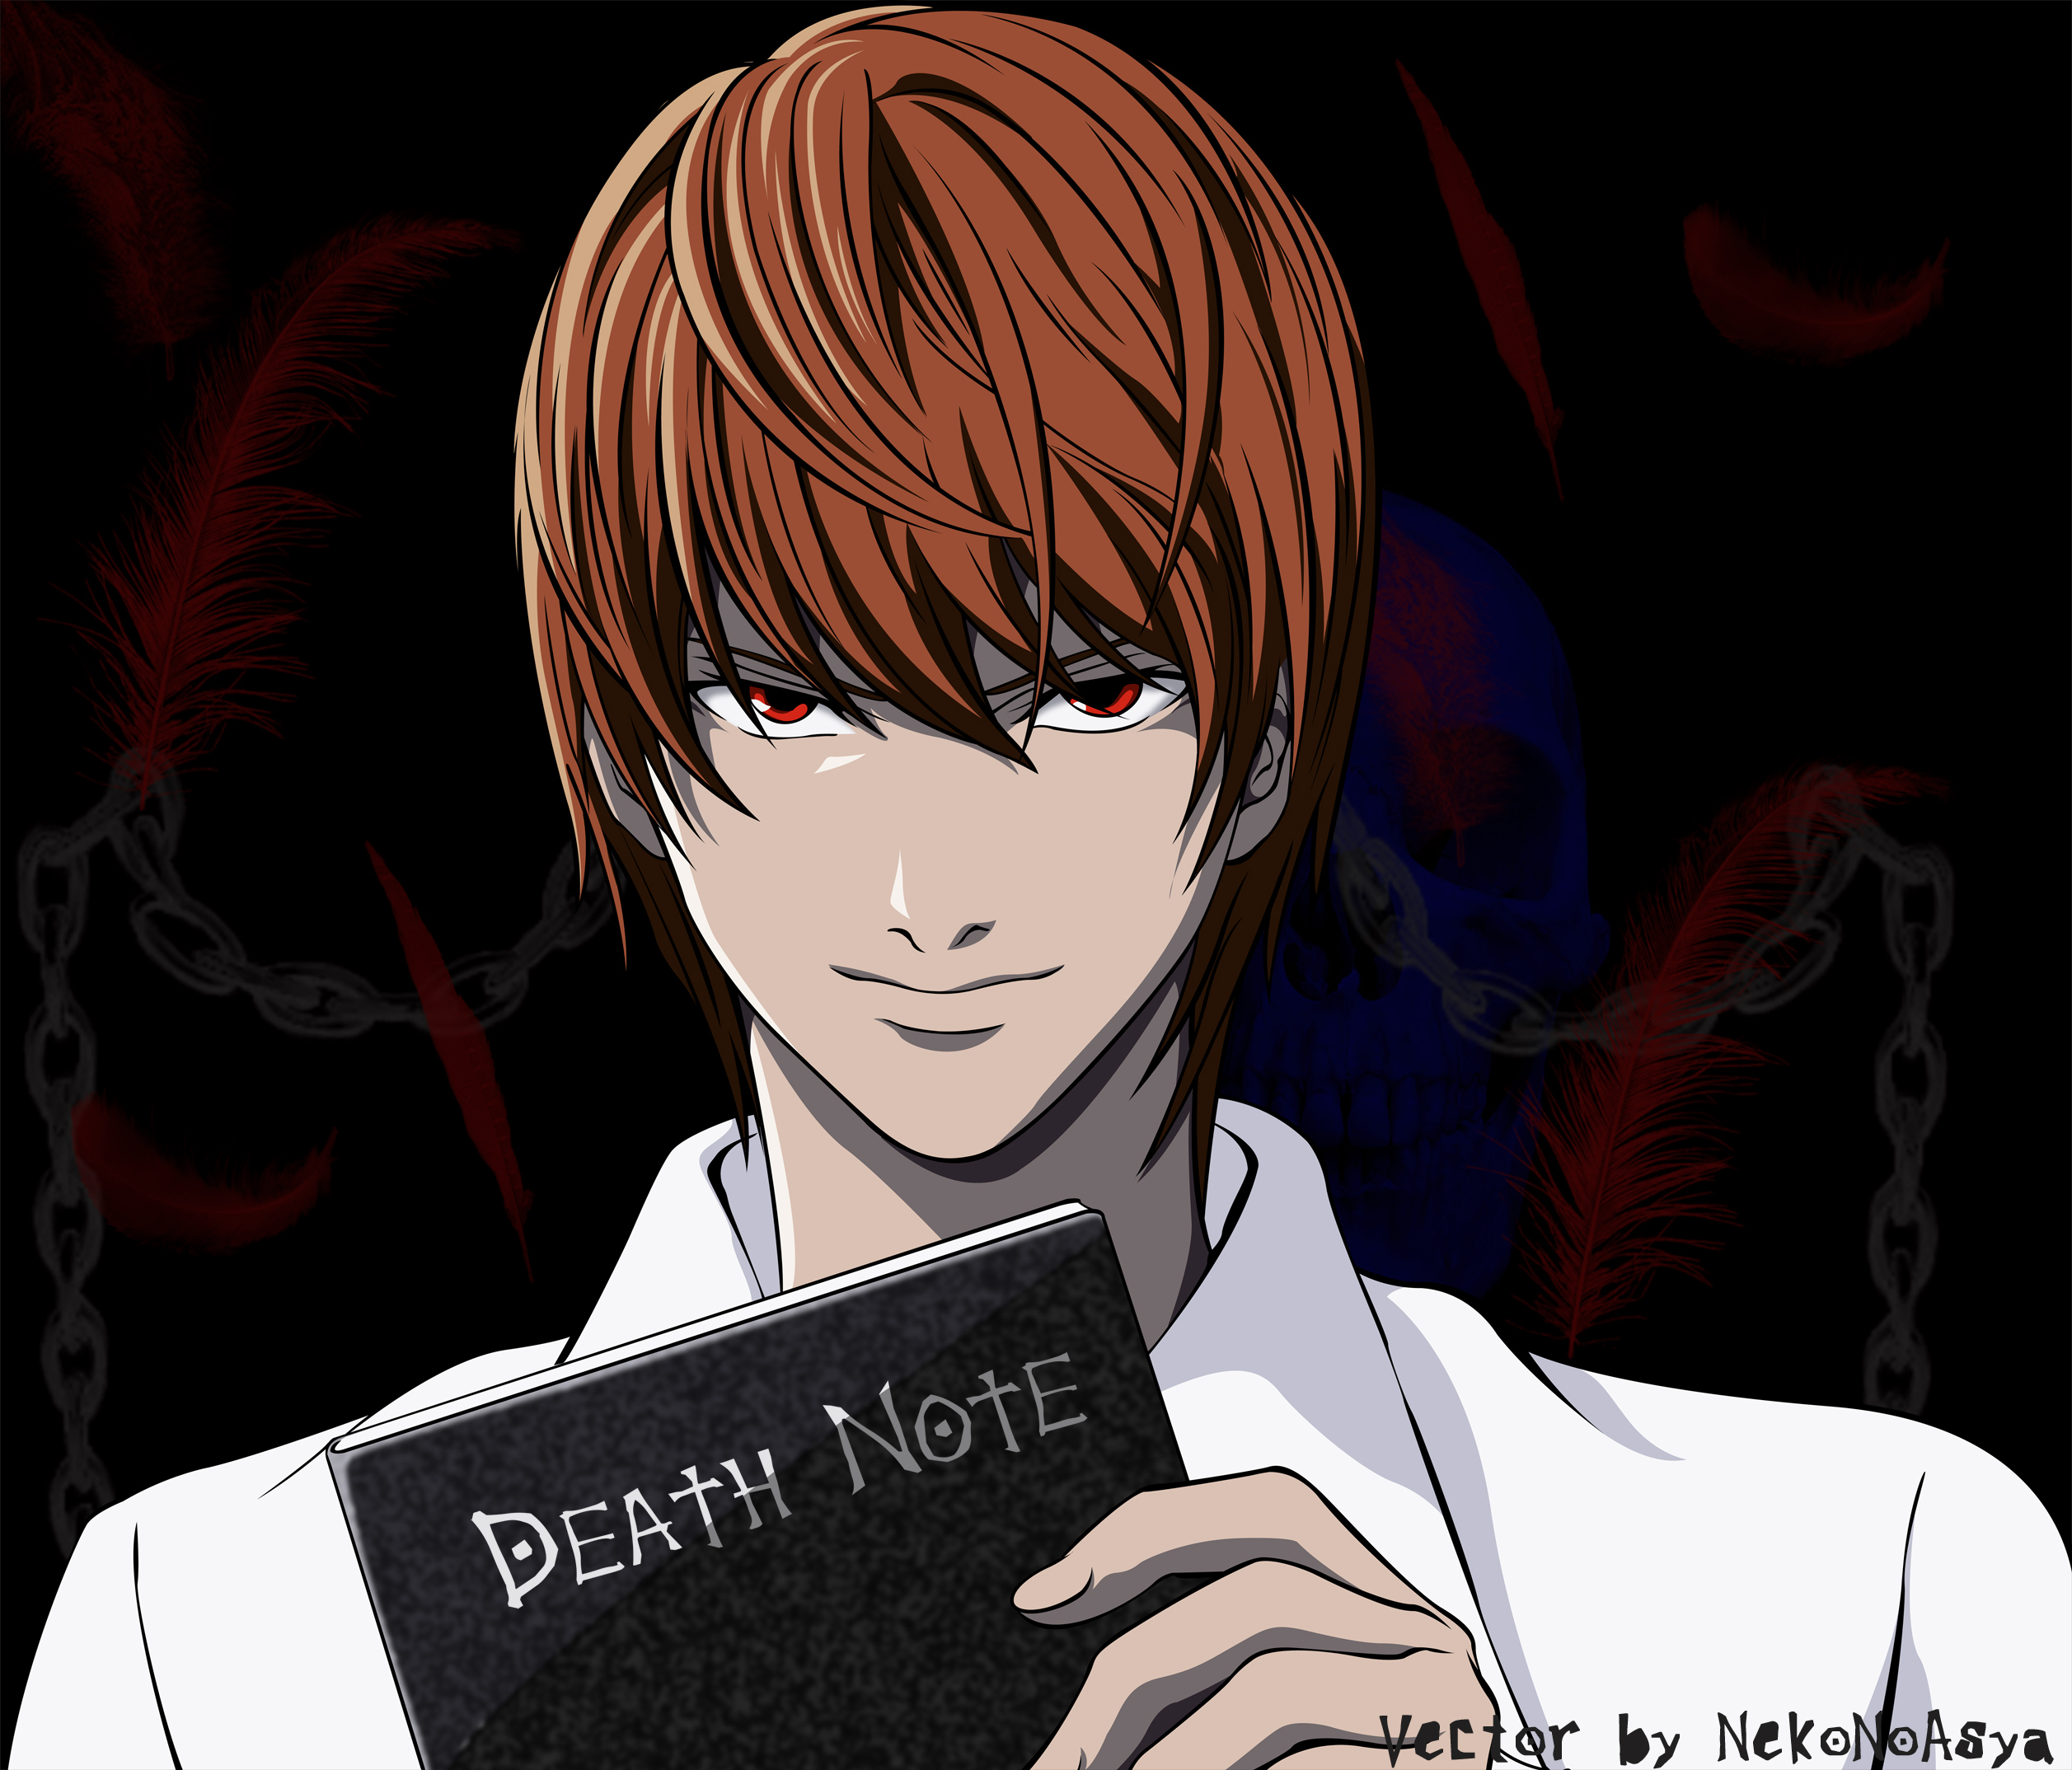 Death-Note-death-note-30926727-2514-2148.jpg